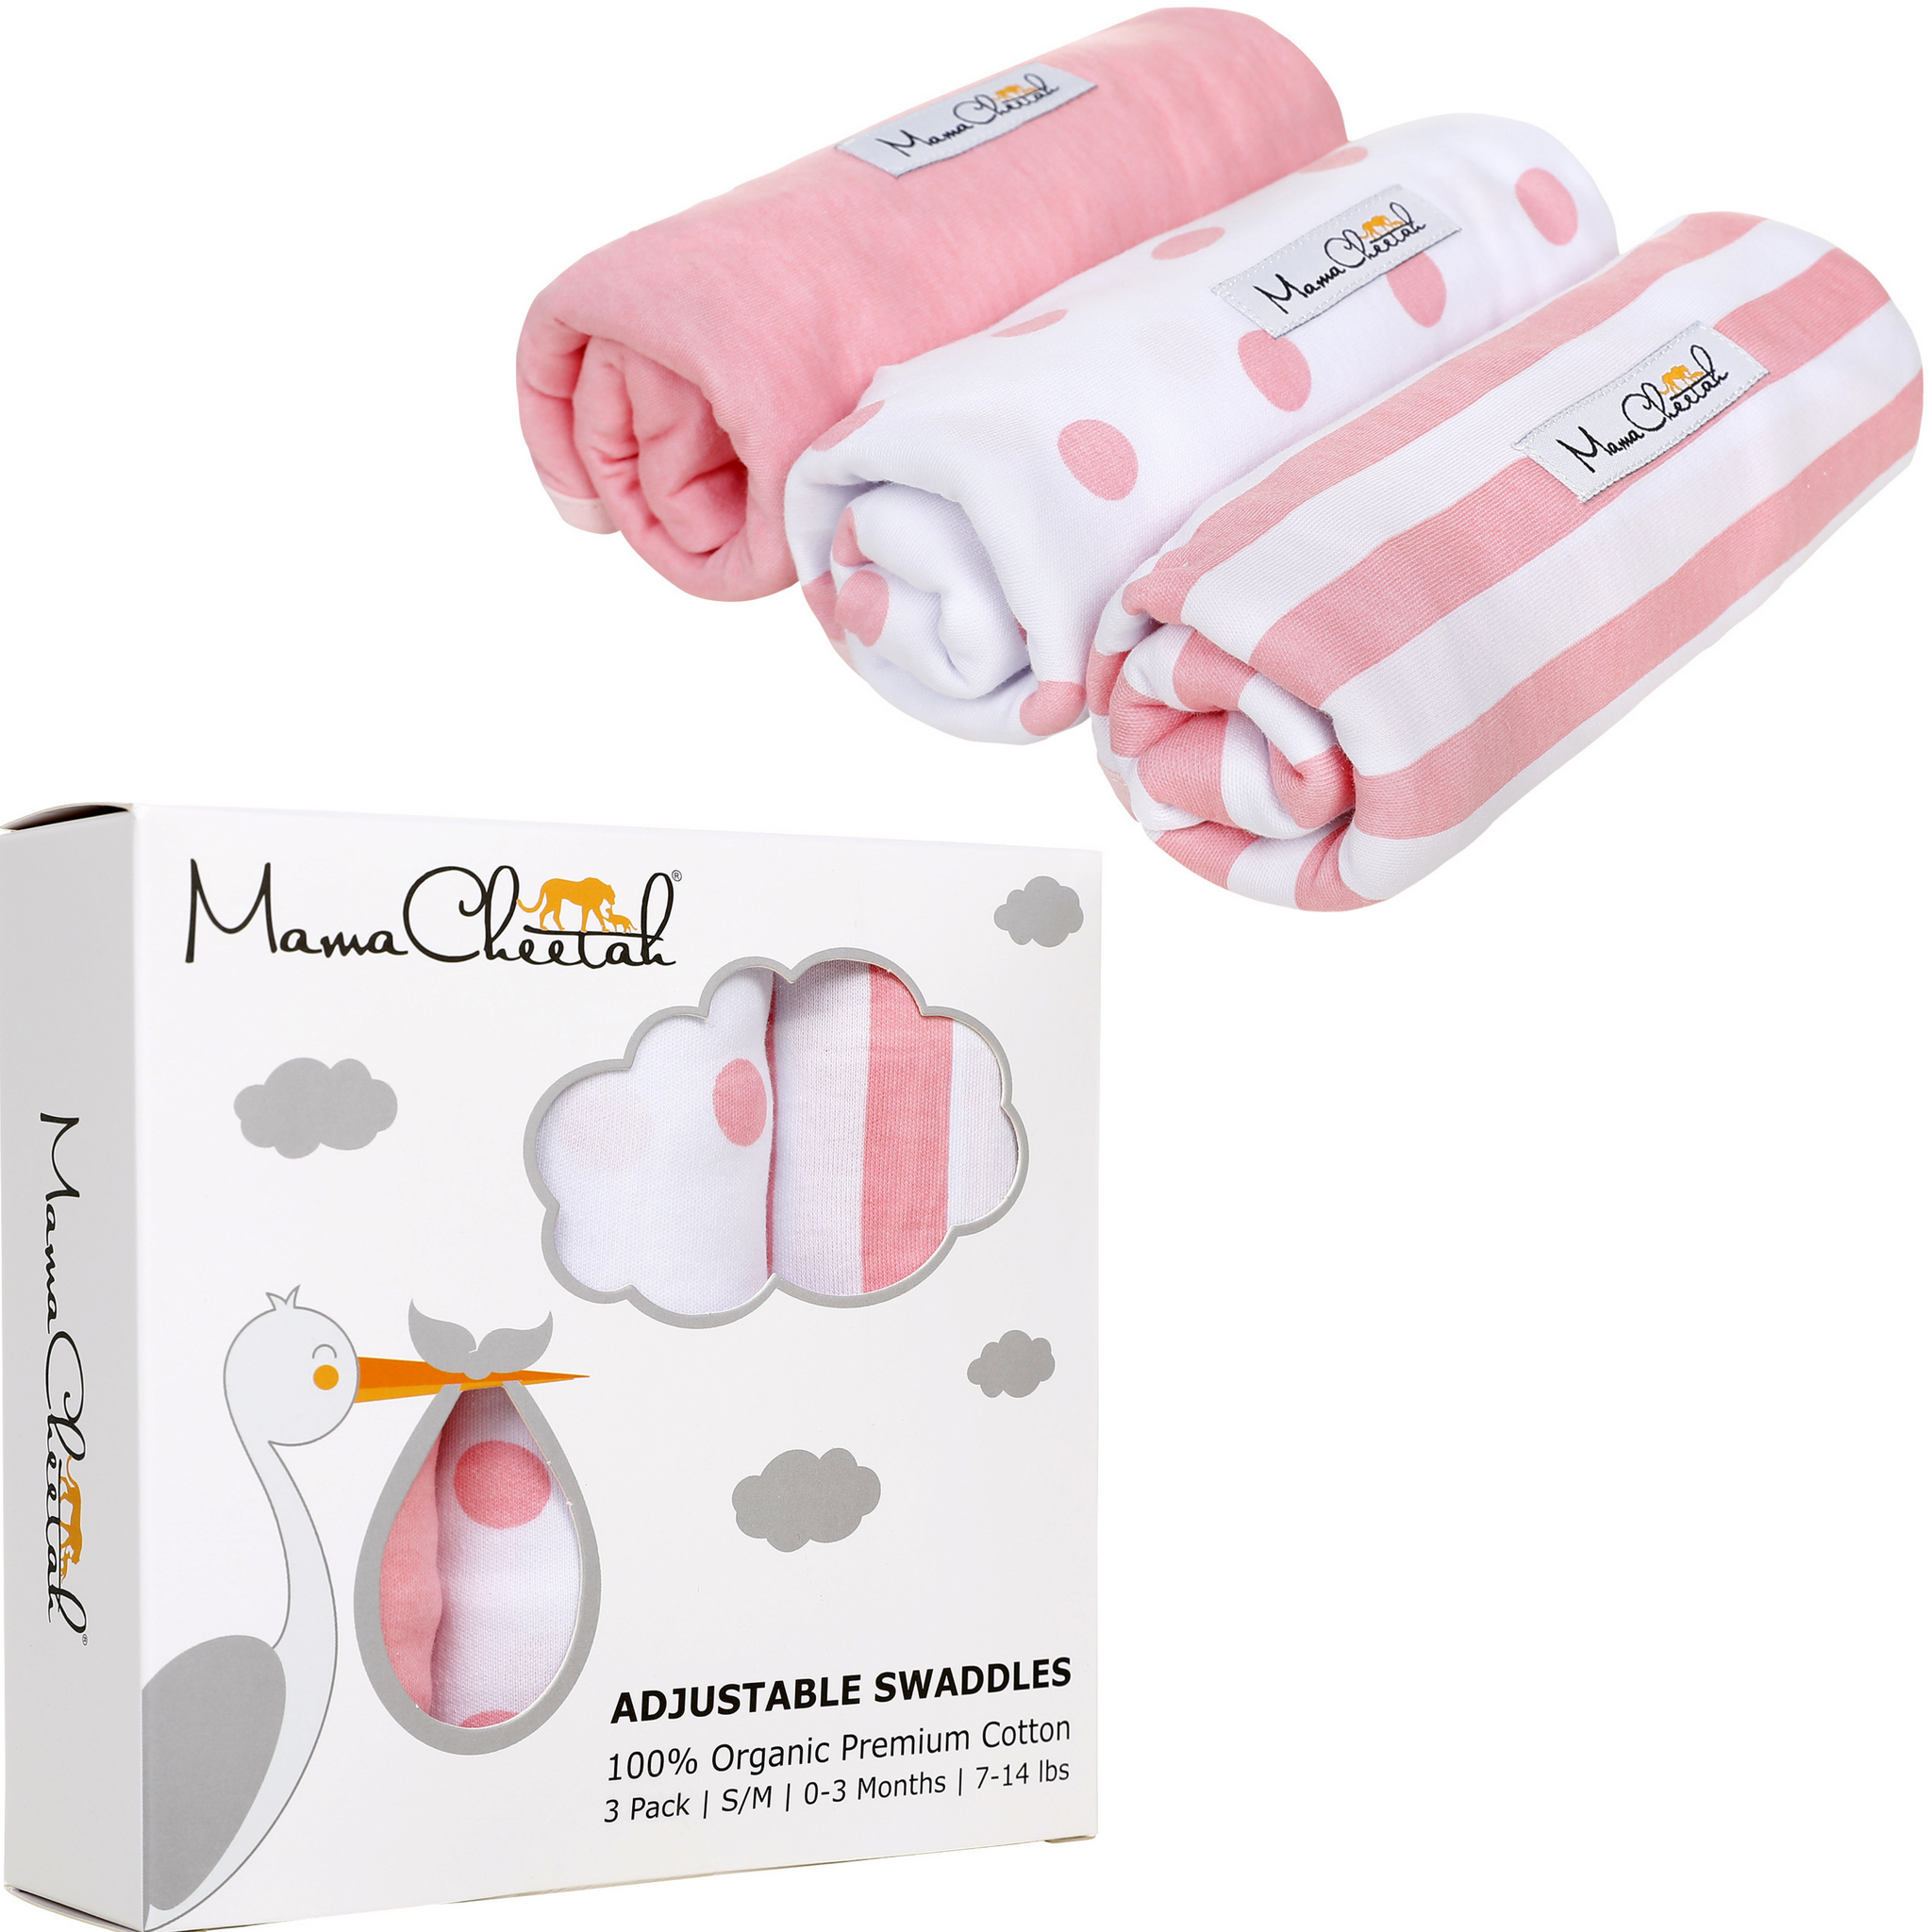 3 Pack Organic Cotton Adjustable Infant Swaddles, 100% Organic